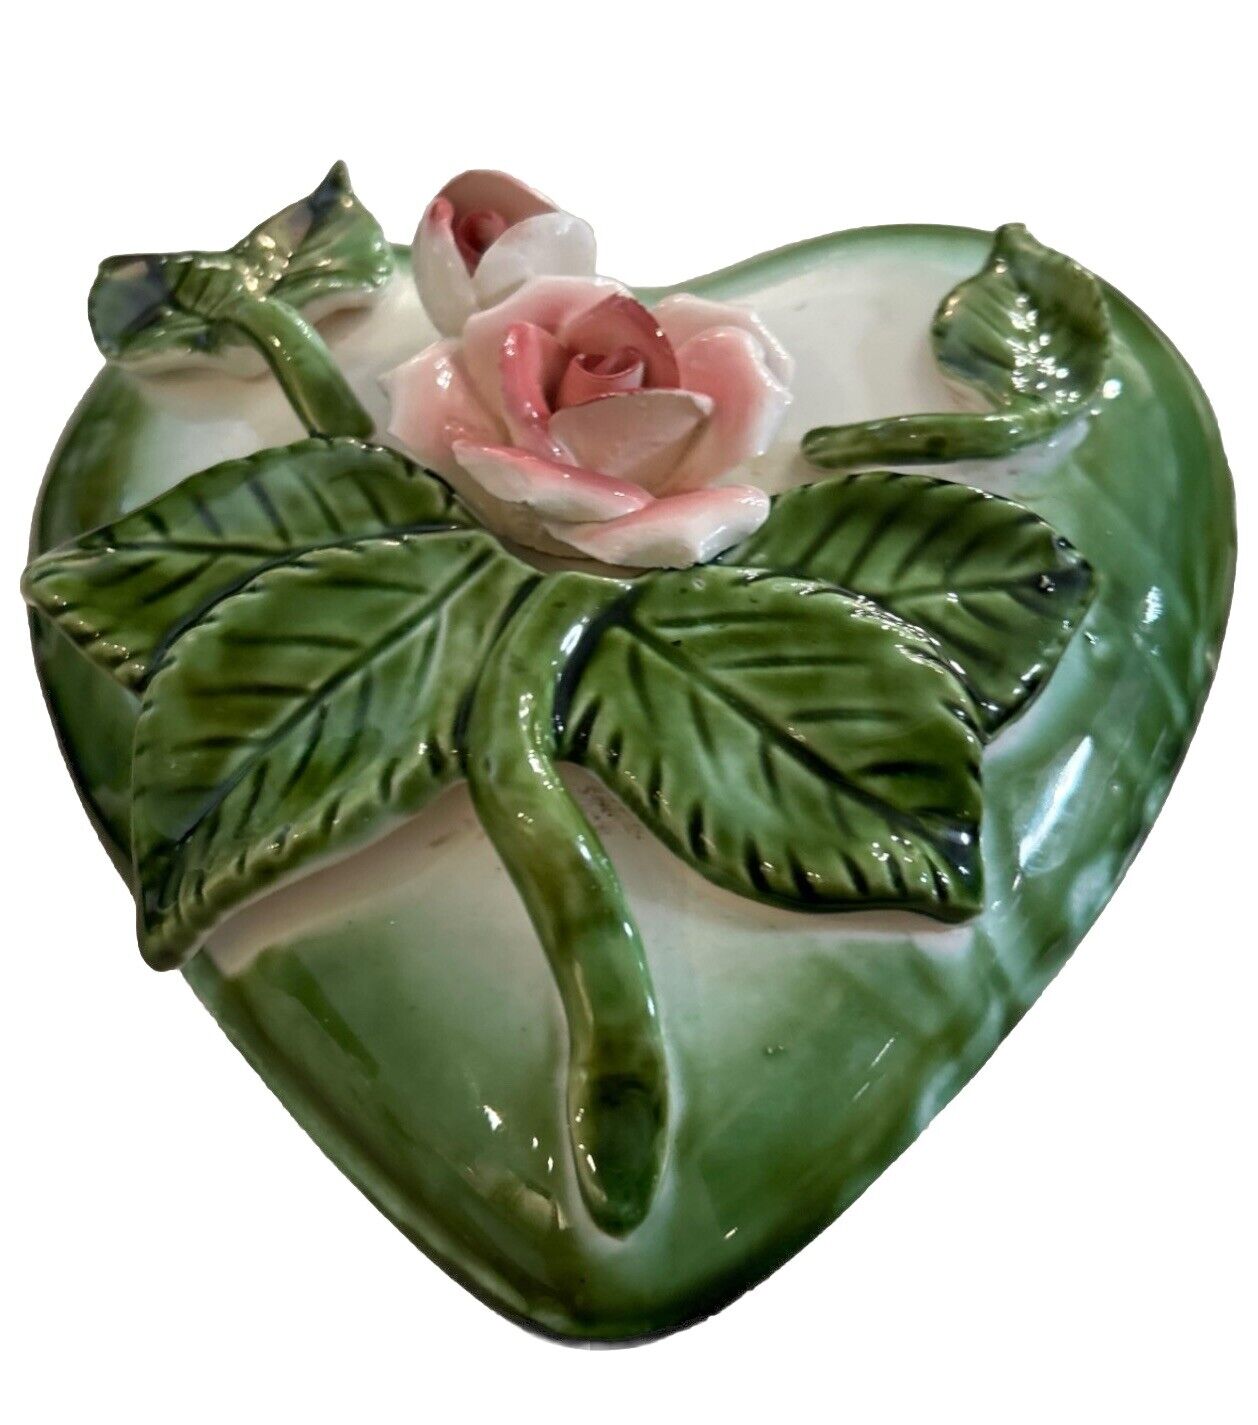 VTG ESTATE SALE 1950s Royal Sealy Heart Shaped Trinket Box Dish Roses Japan